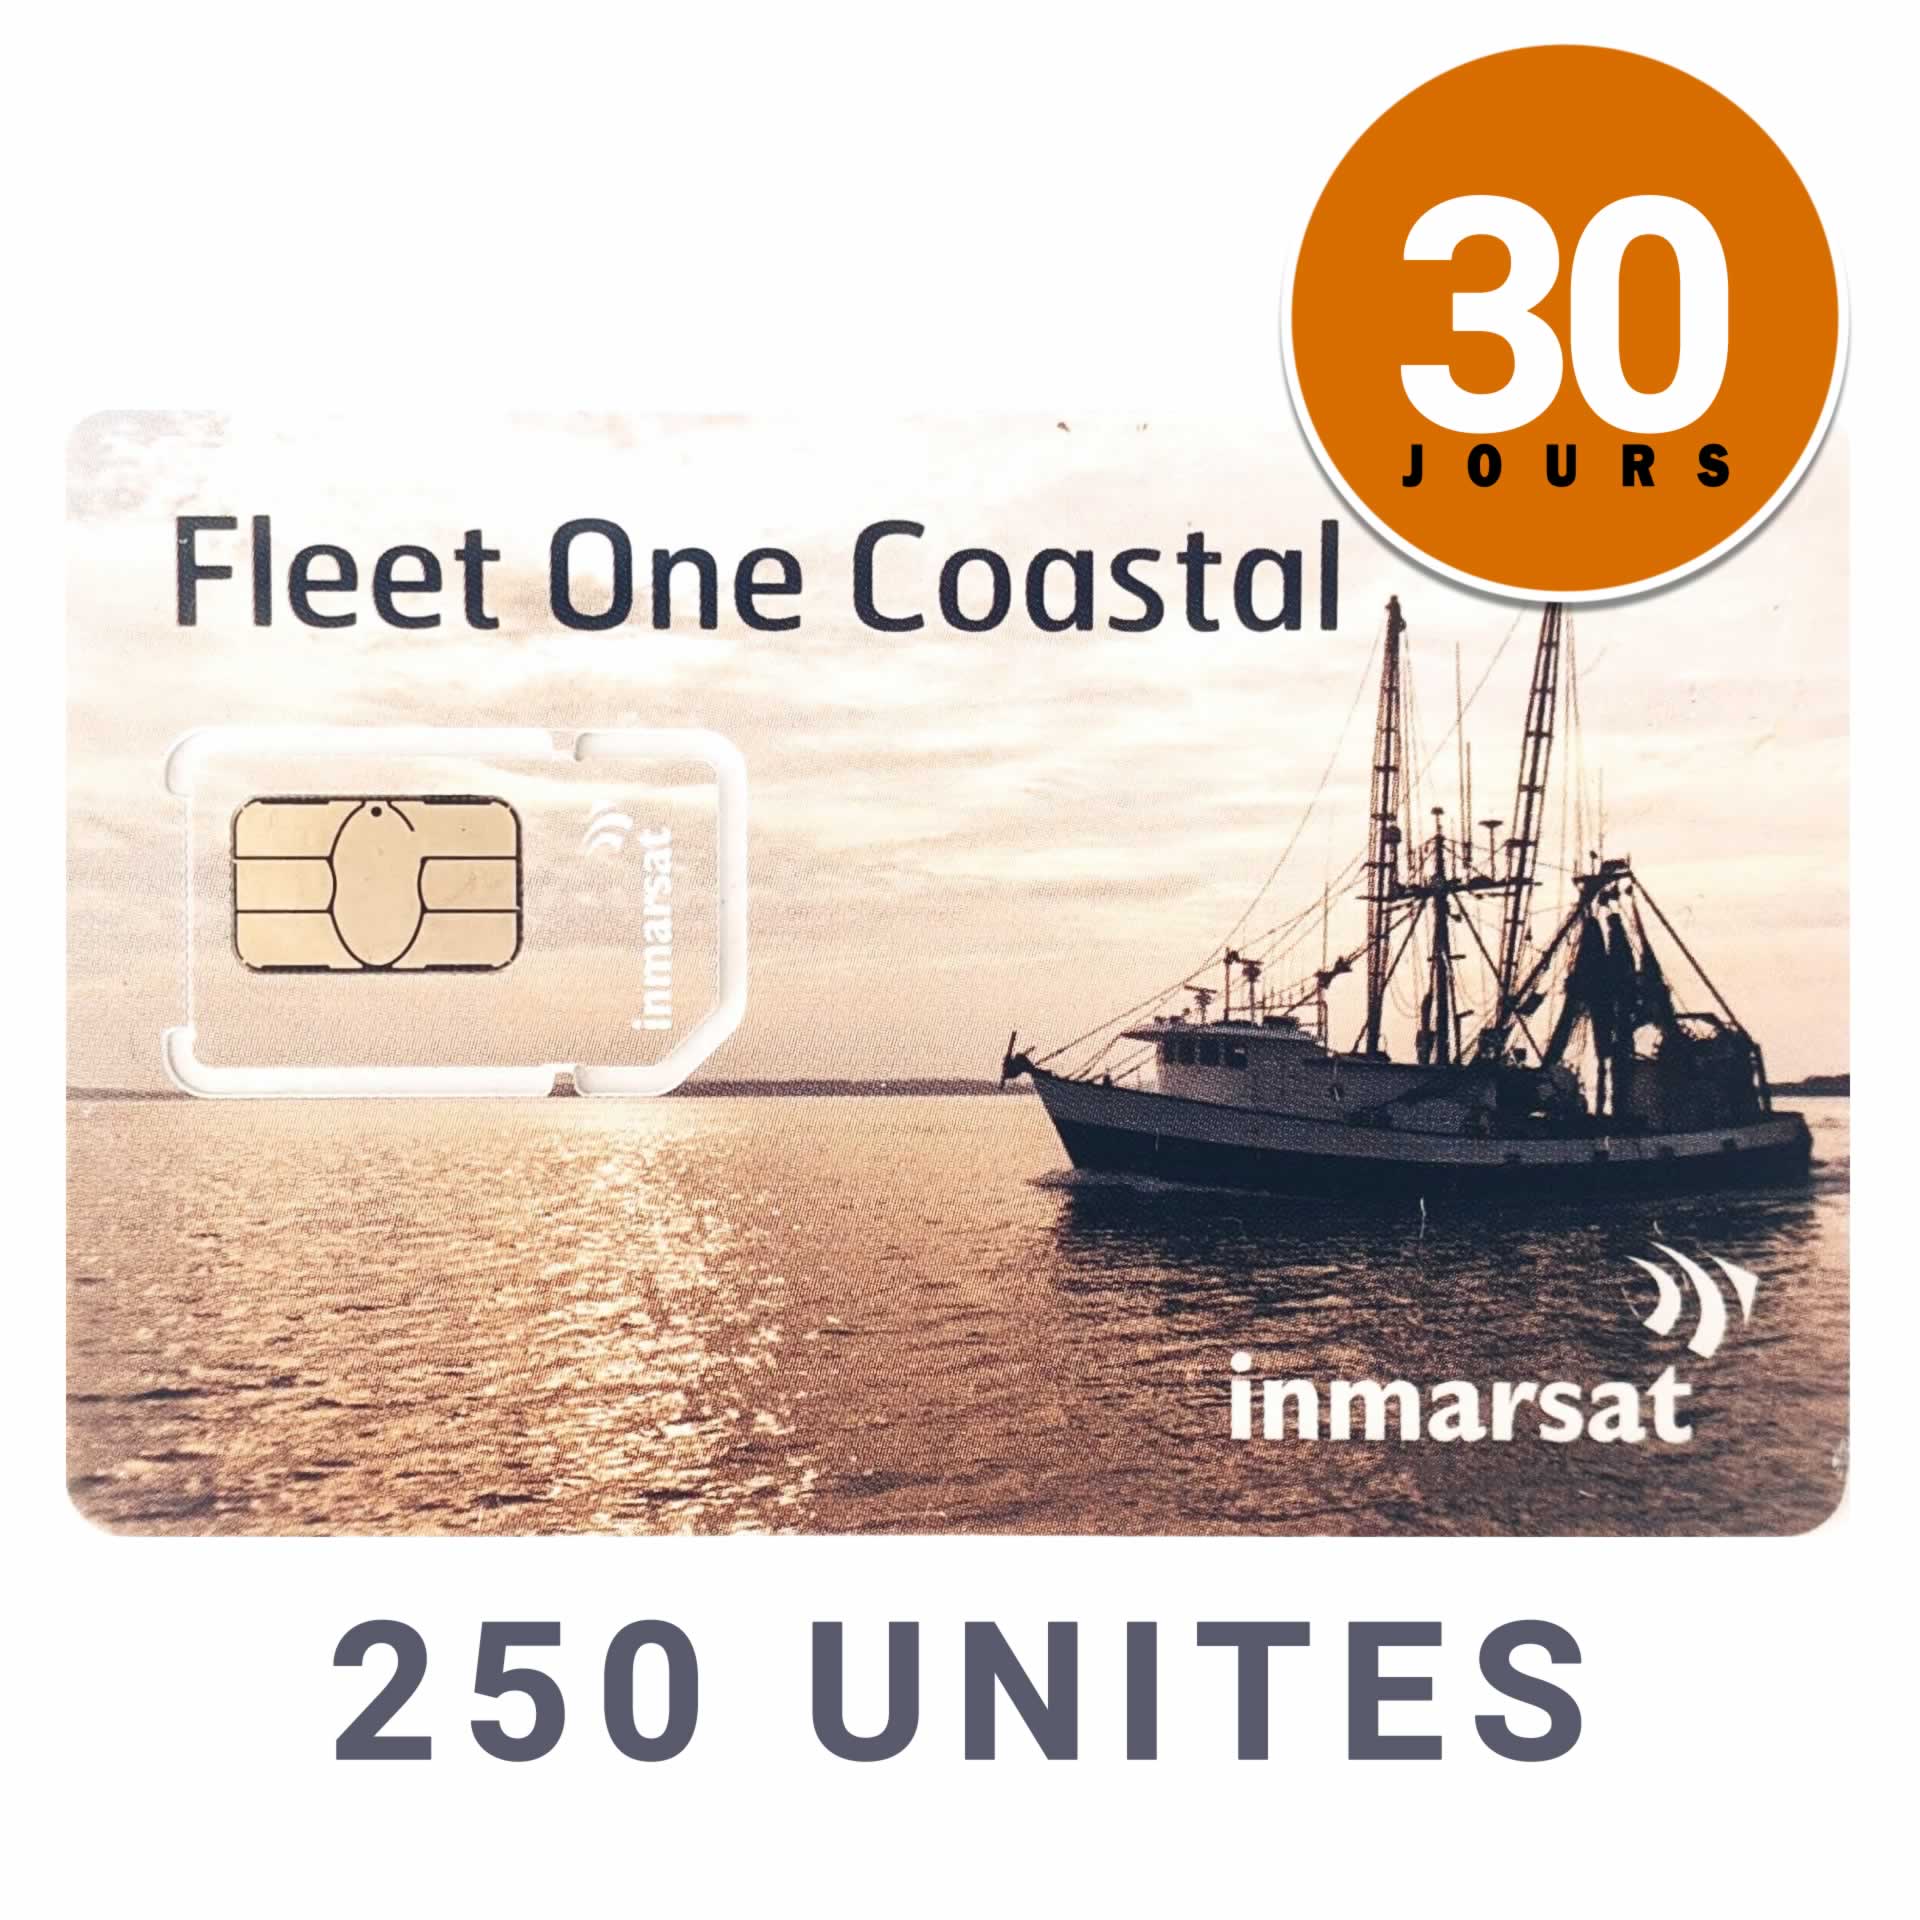 Carta prepagata INMARSAT Coast FLEET ONE ricaricabile - 250 UNITA' - 30 GIORNI